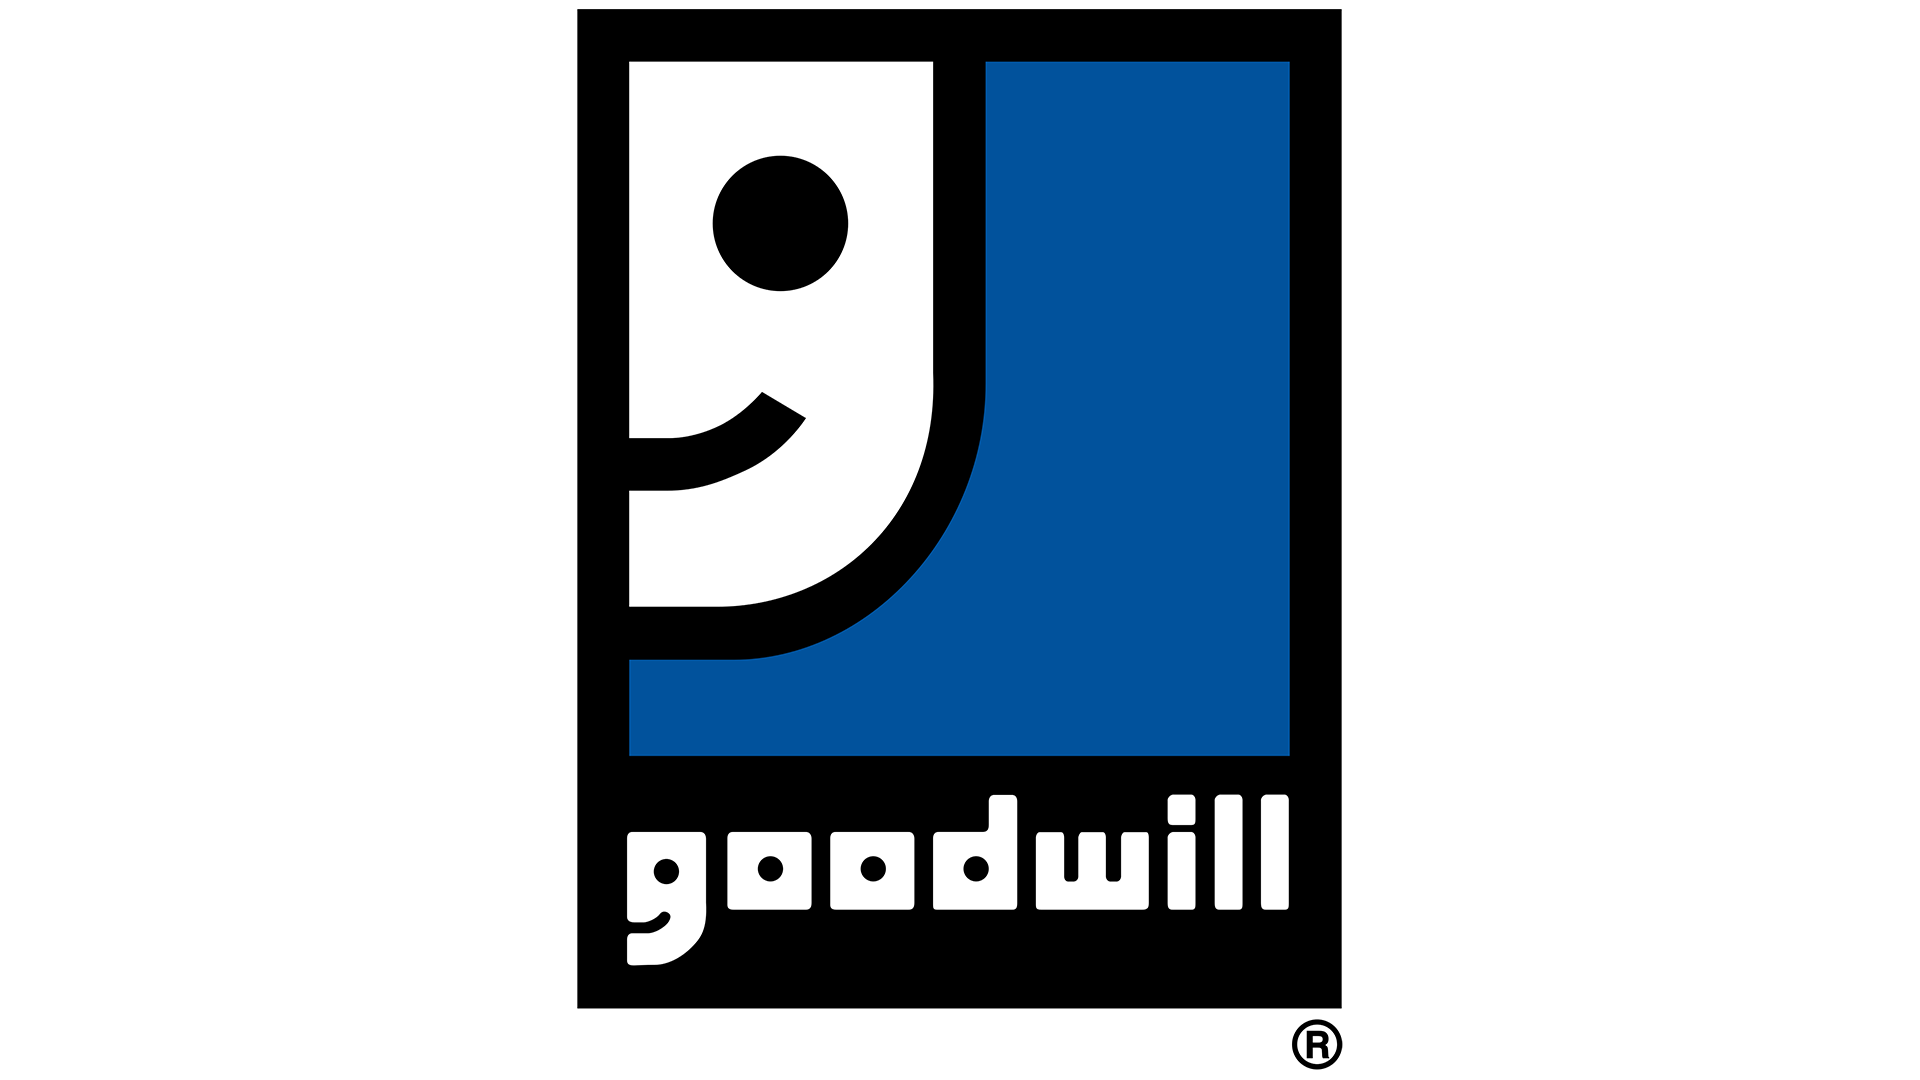 brgg-logos-goodwill.png